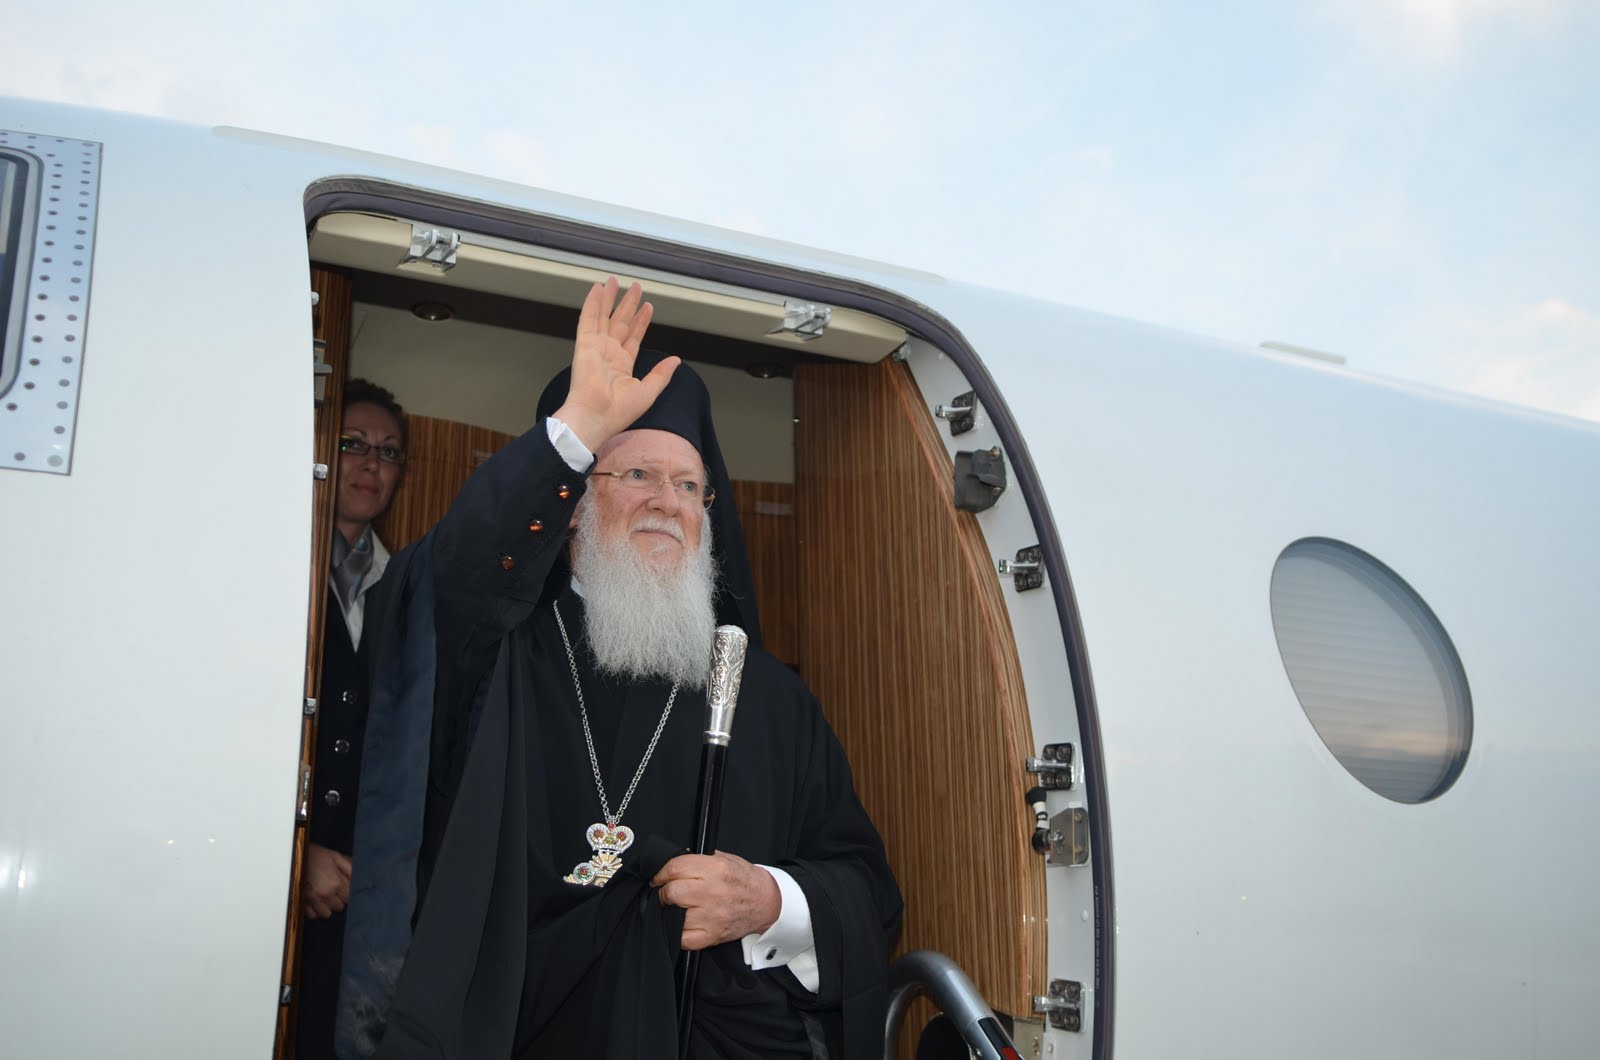 Ecumenical Patriarch Bartholomew will visit the United States next July